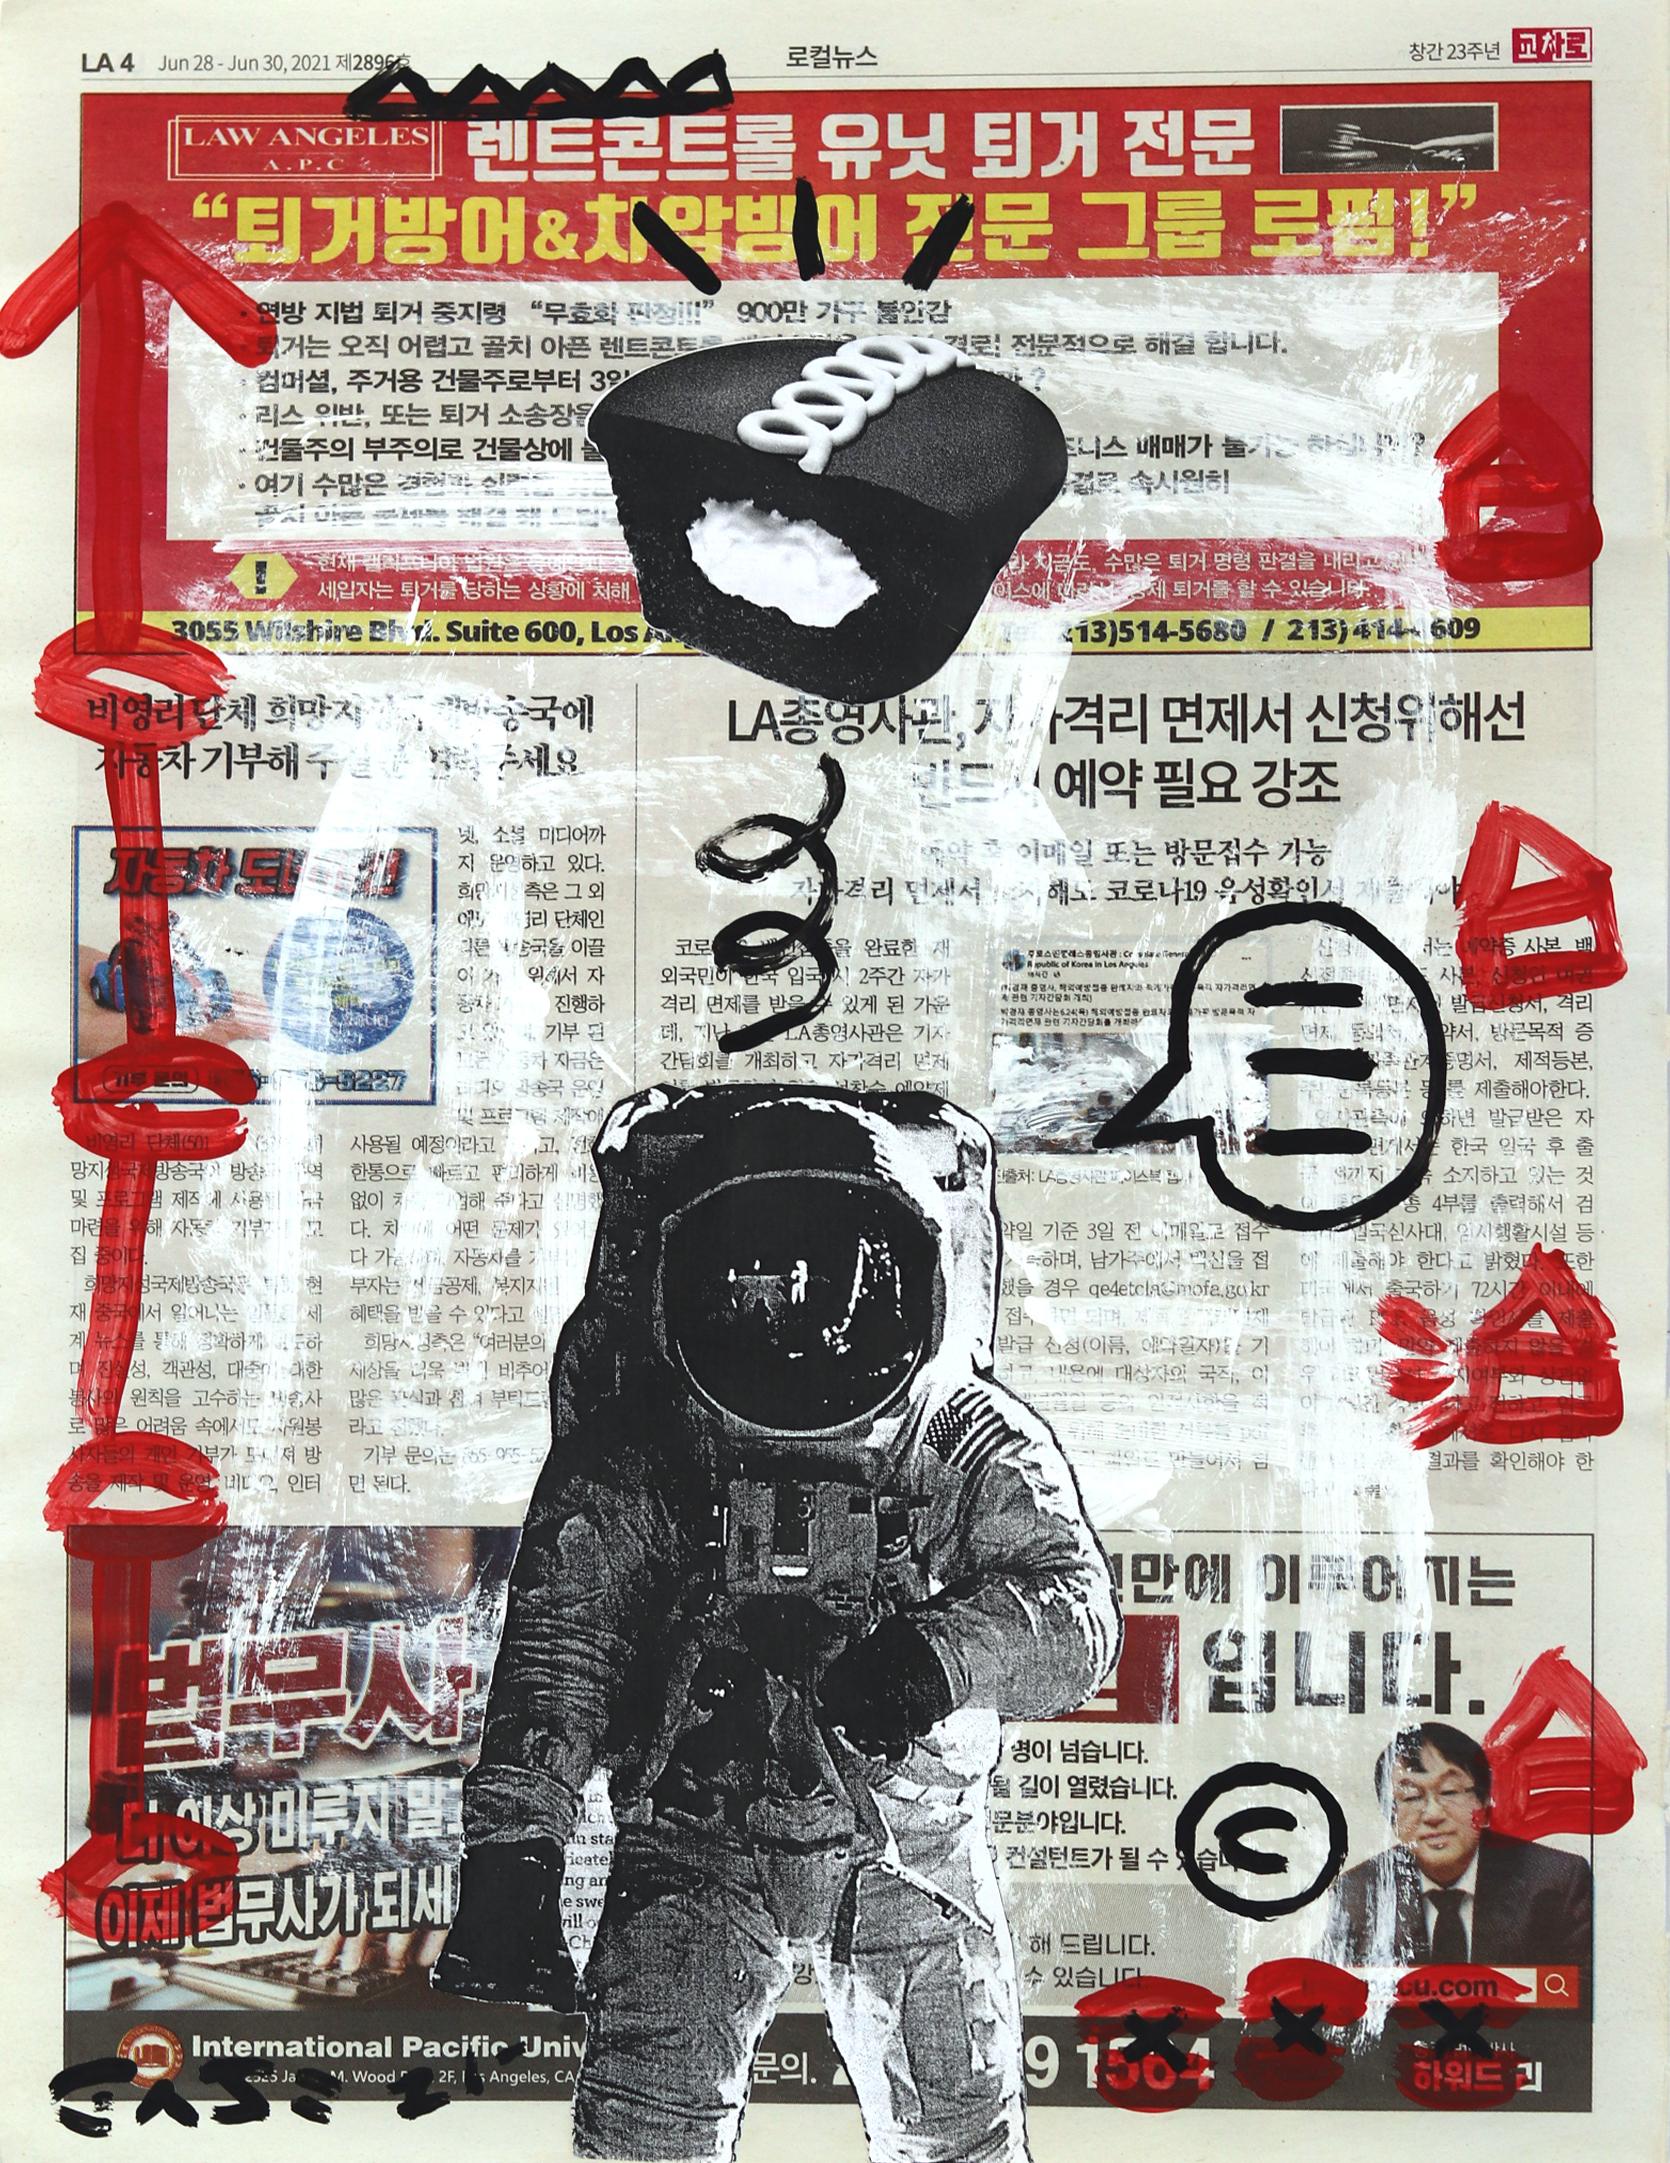 "Space Snax" Original Junk Food Gary John Contemporary Pop Artwork on Newspaper